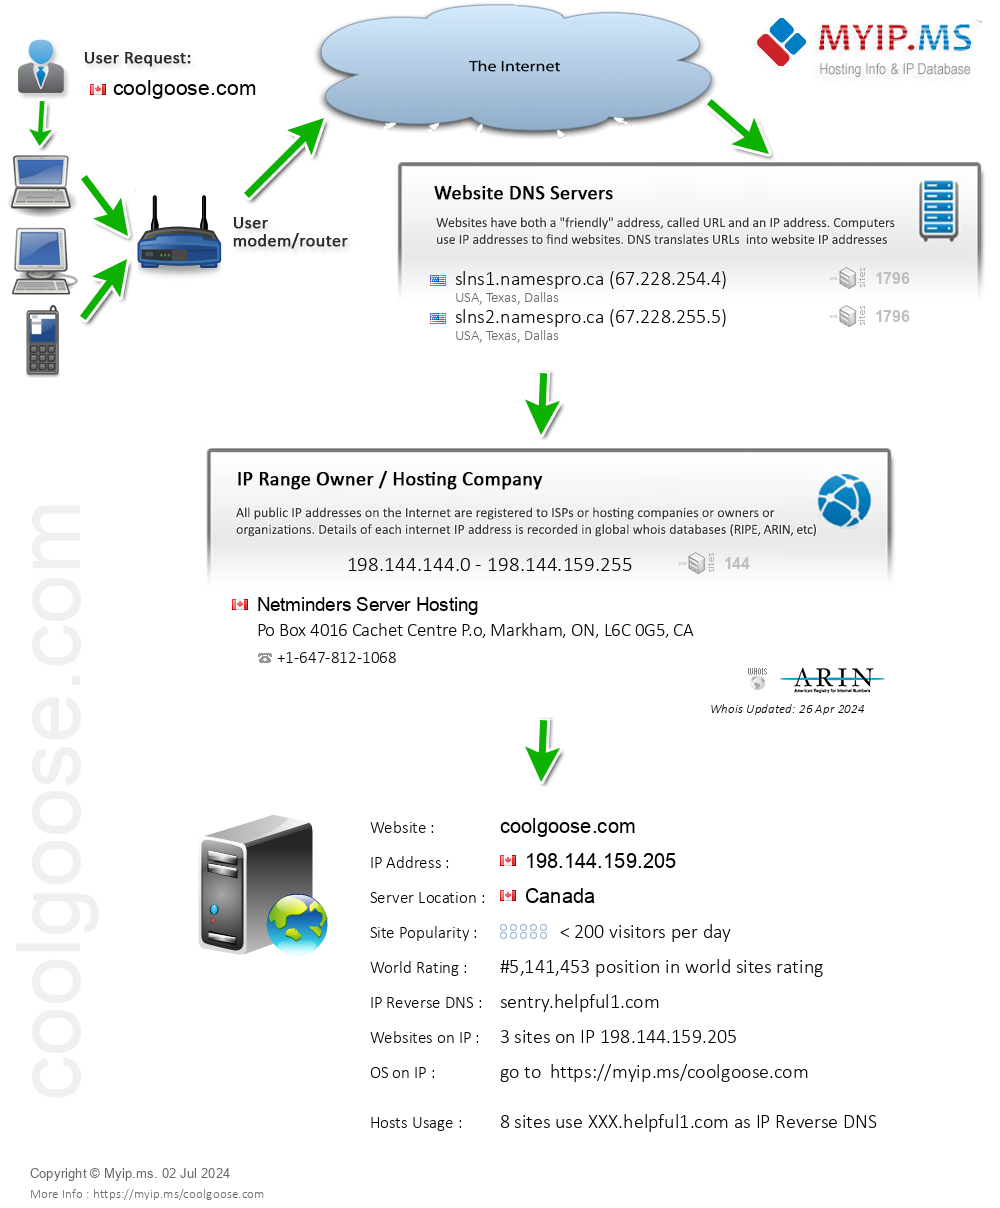 Coolgoose.com - Website Hosting Visual IP Diagram